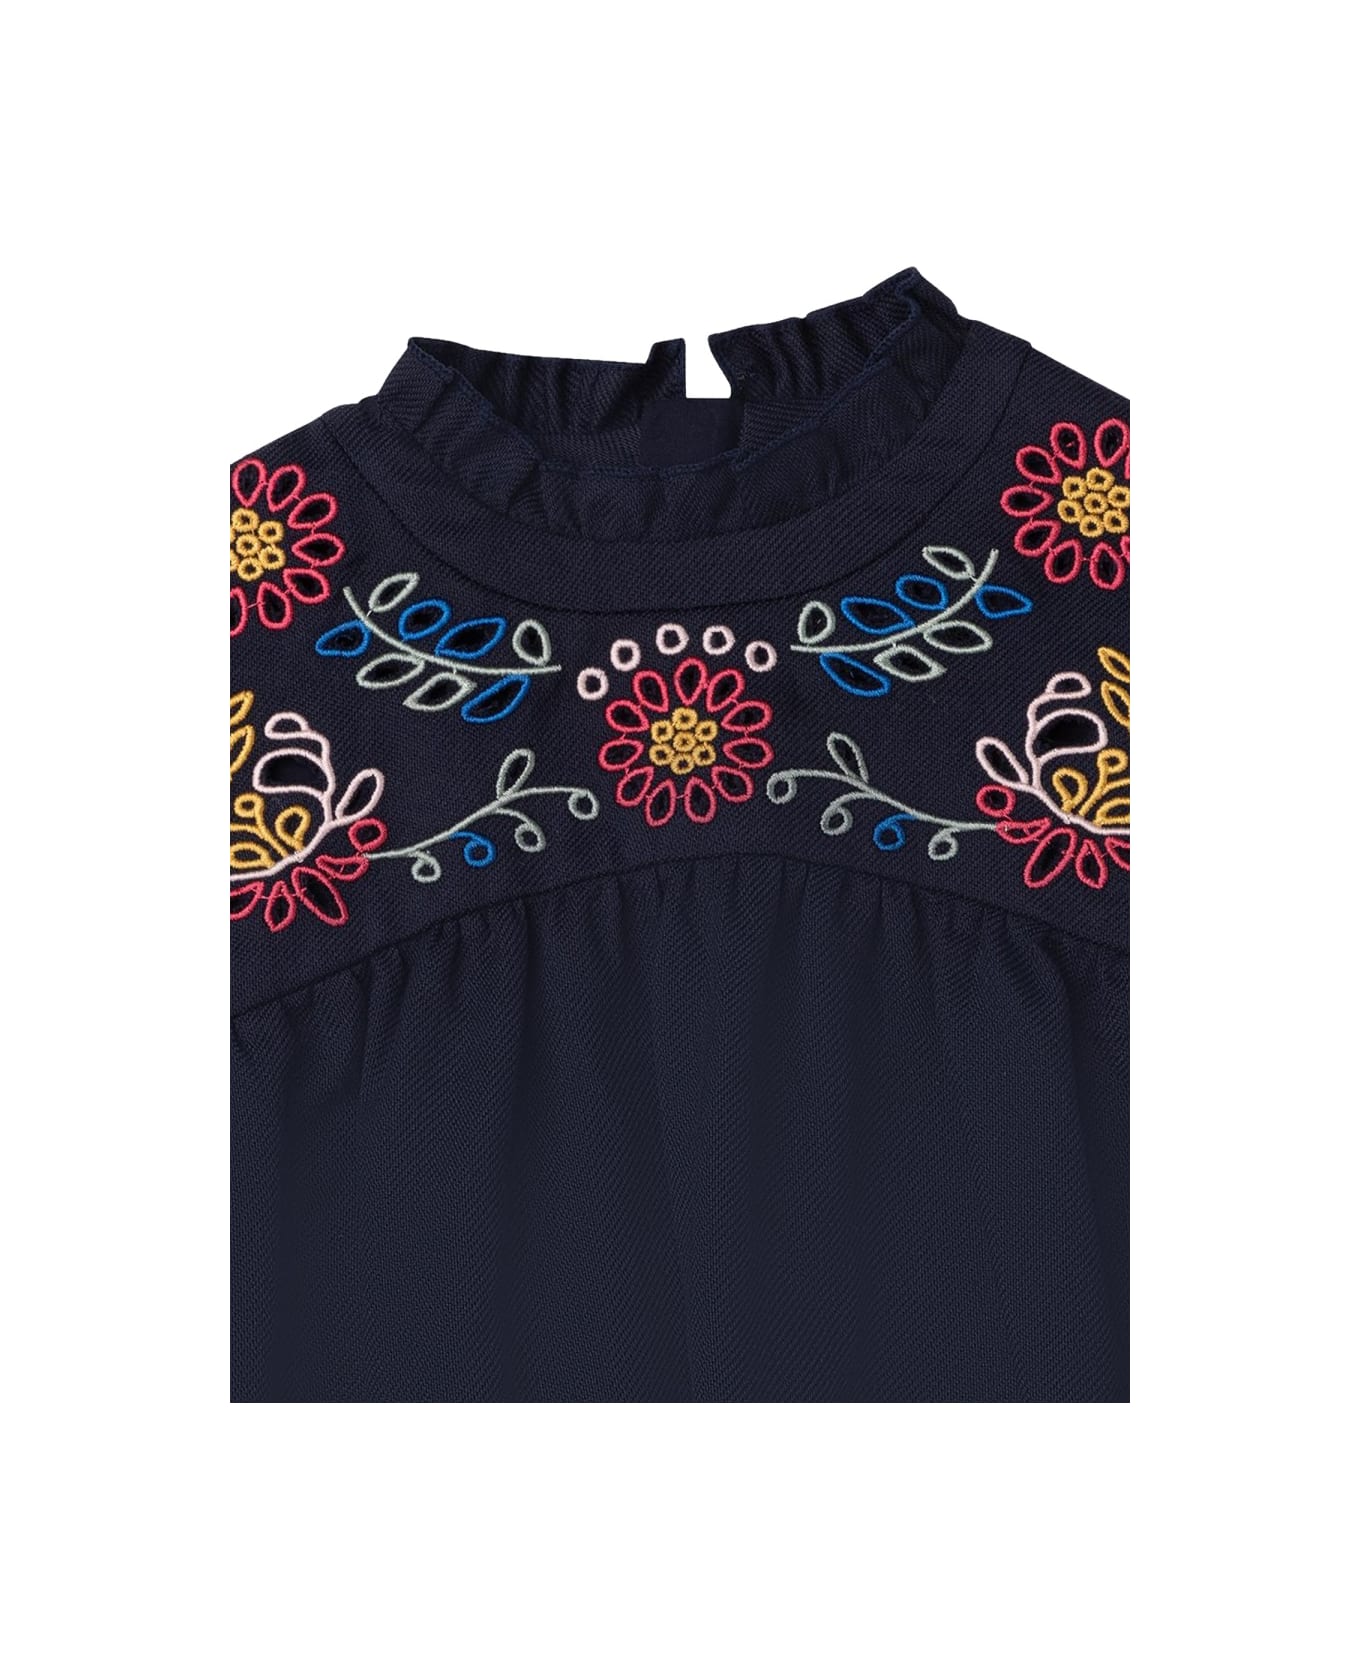 Chloé Flower Embroidery Dress - BLUE